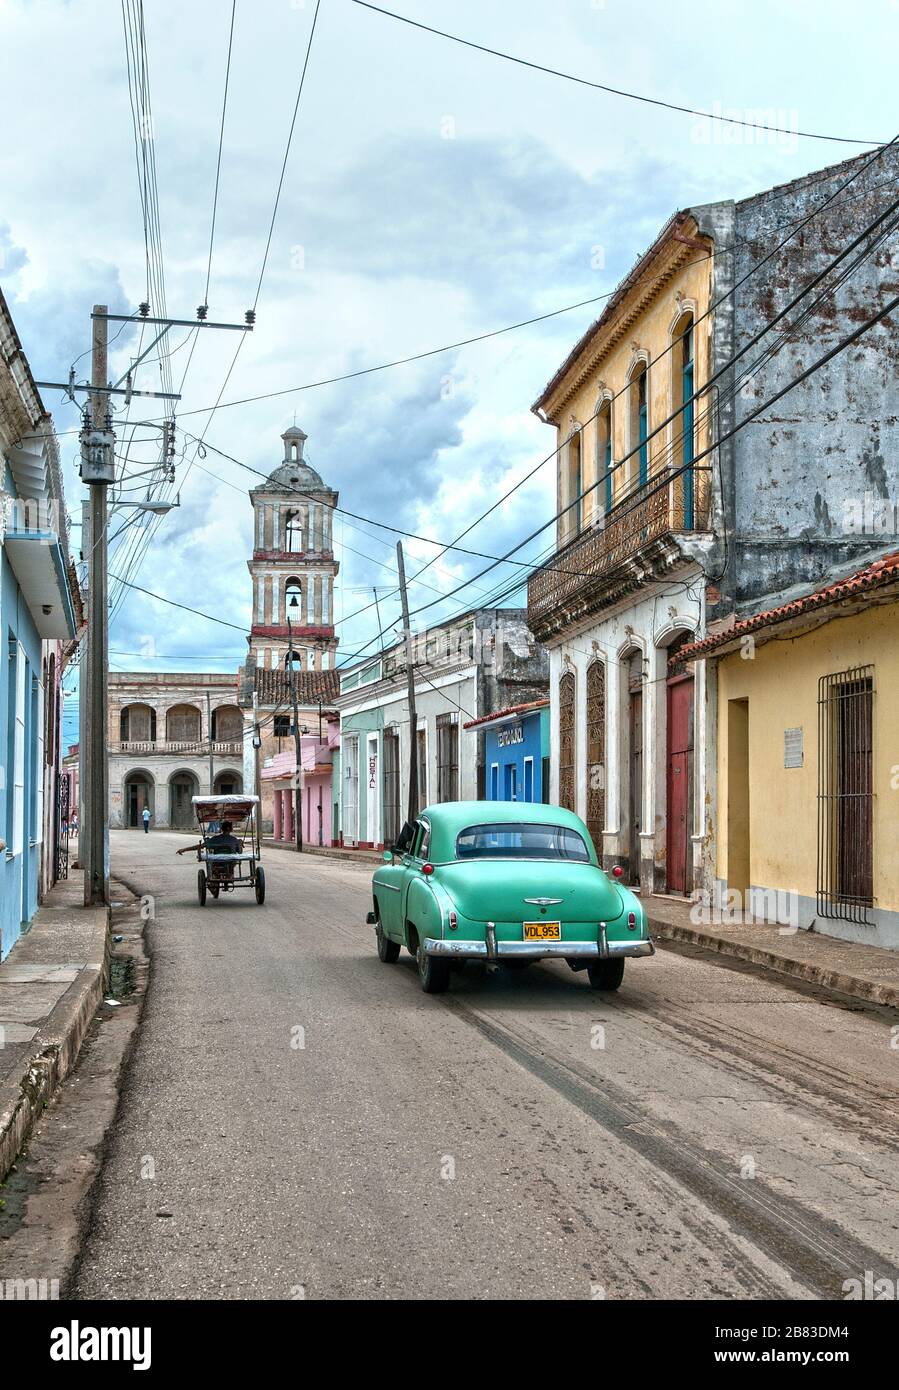 Vintage car and Iglesia Parroquial Mayor(Major Parochial) church, Remedios, Santa Clara, Cuba Stock Photo